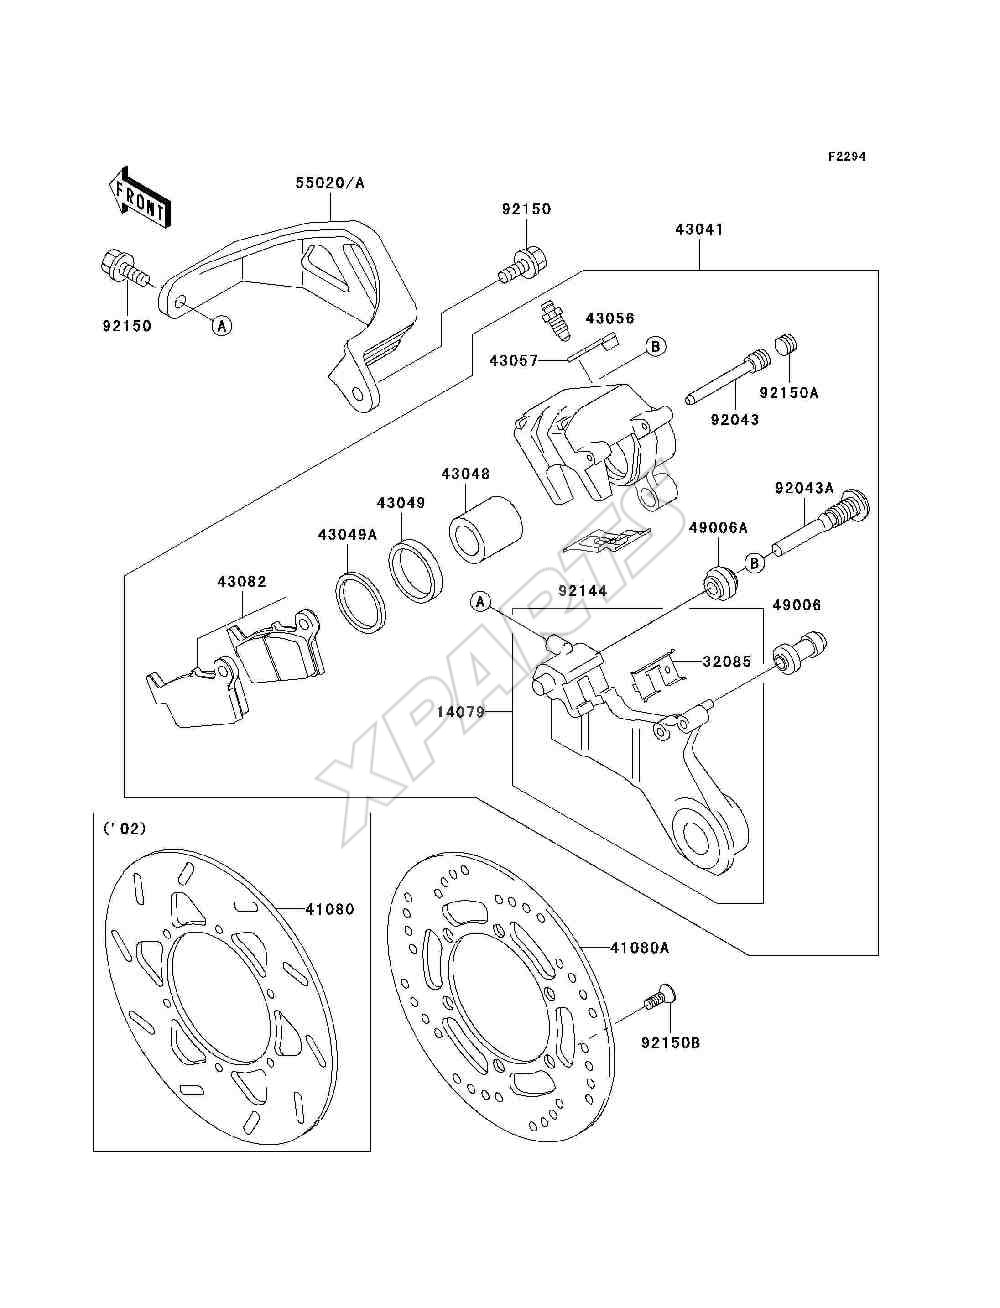 Bild für Kategorie Rear Brake(KLX300-A7 / A8)